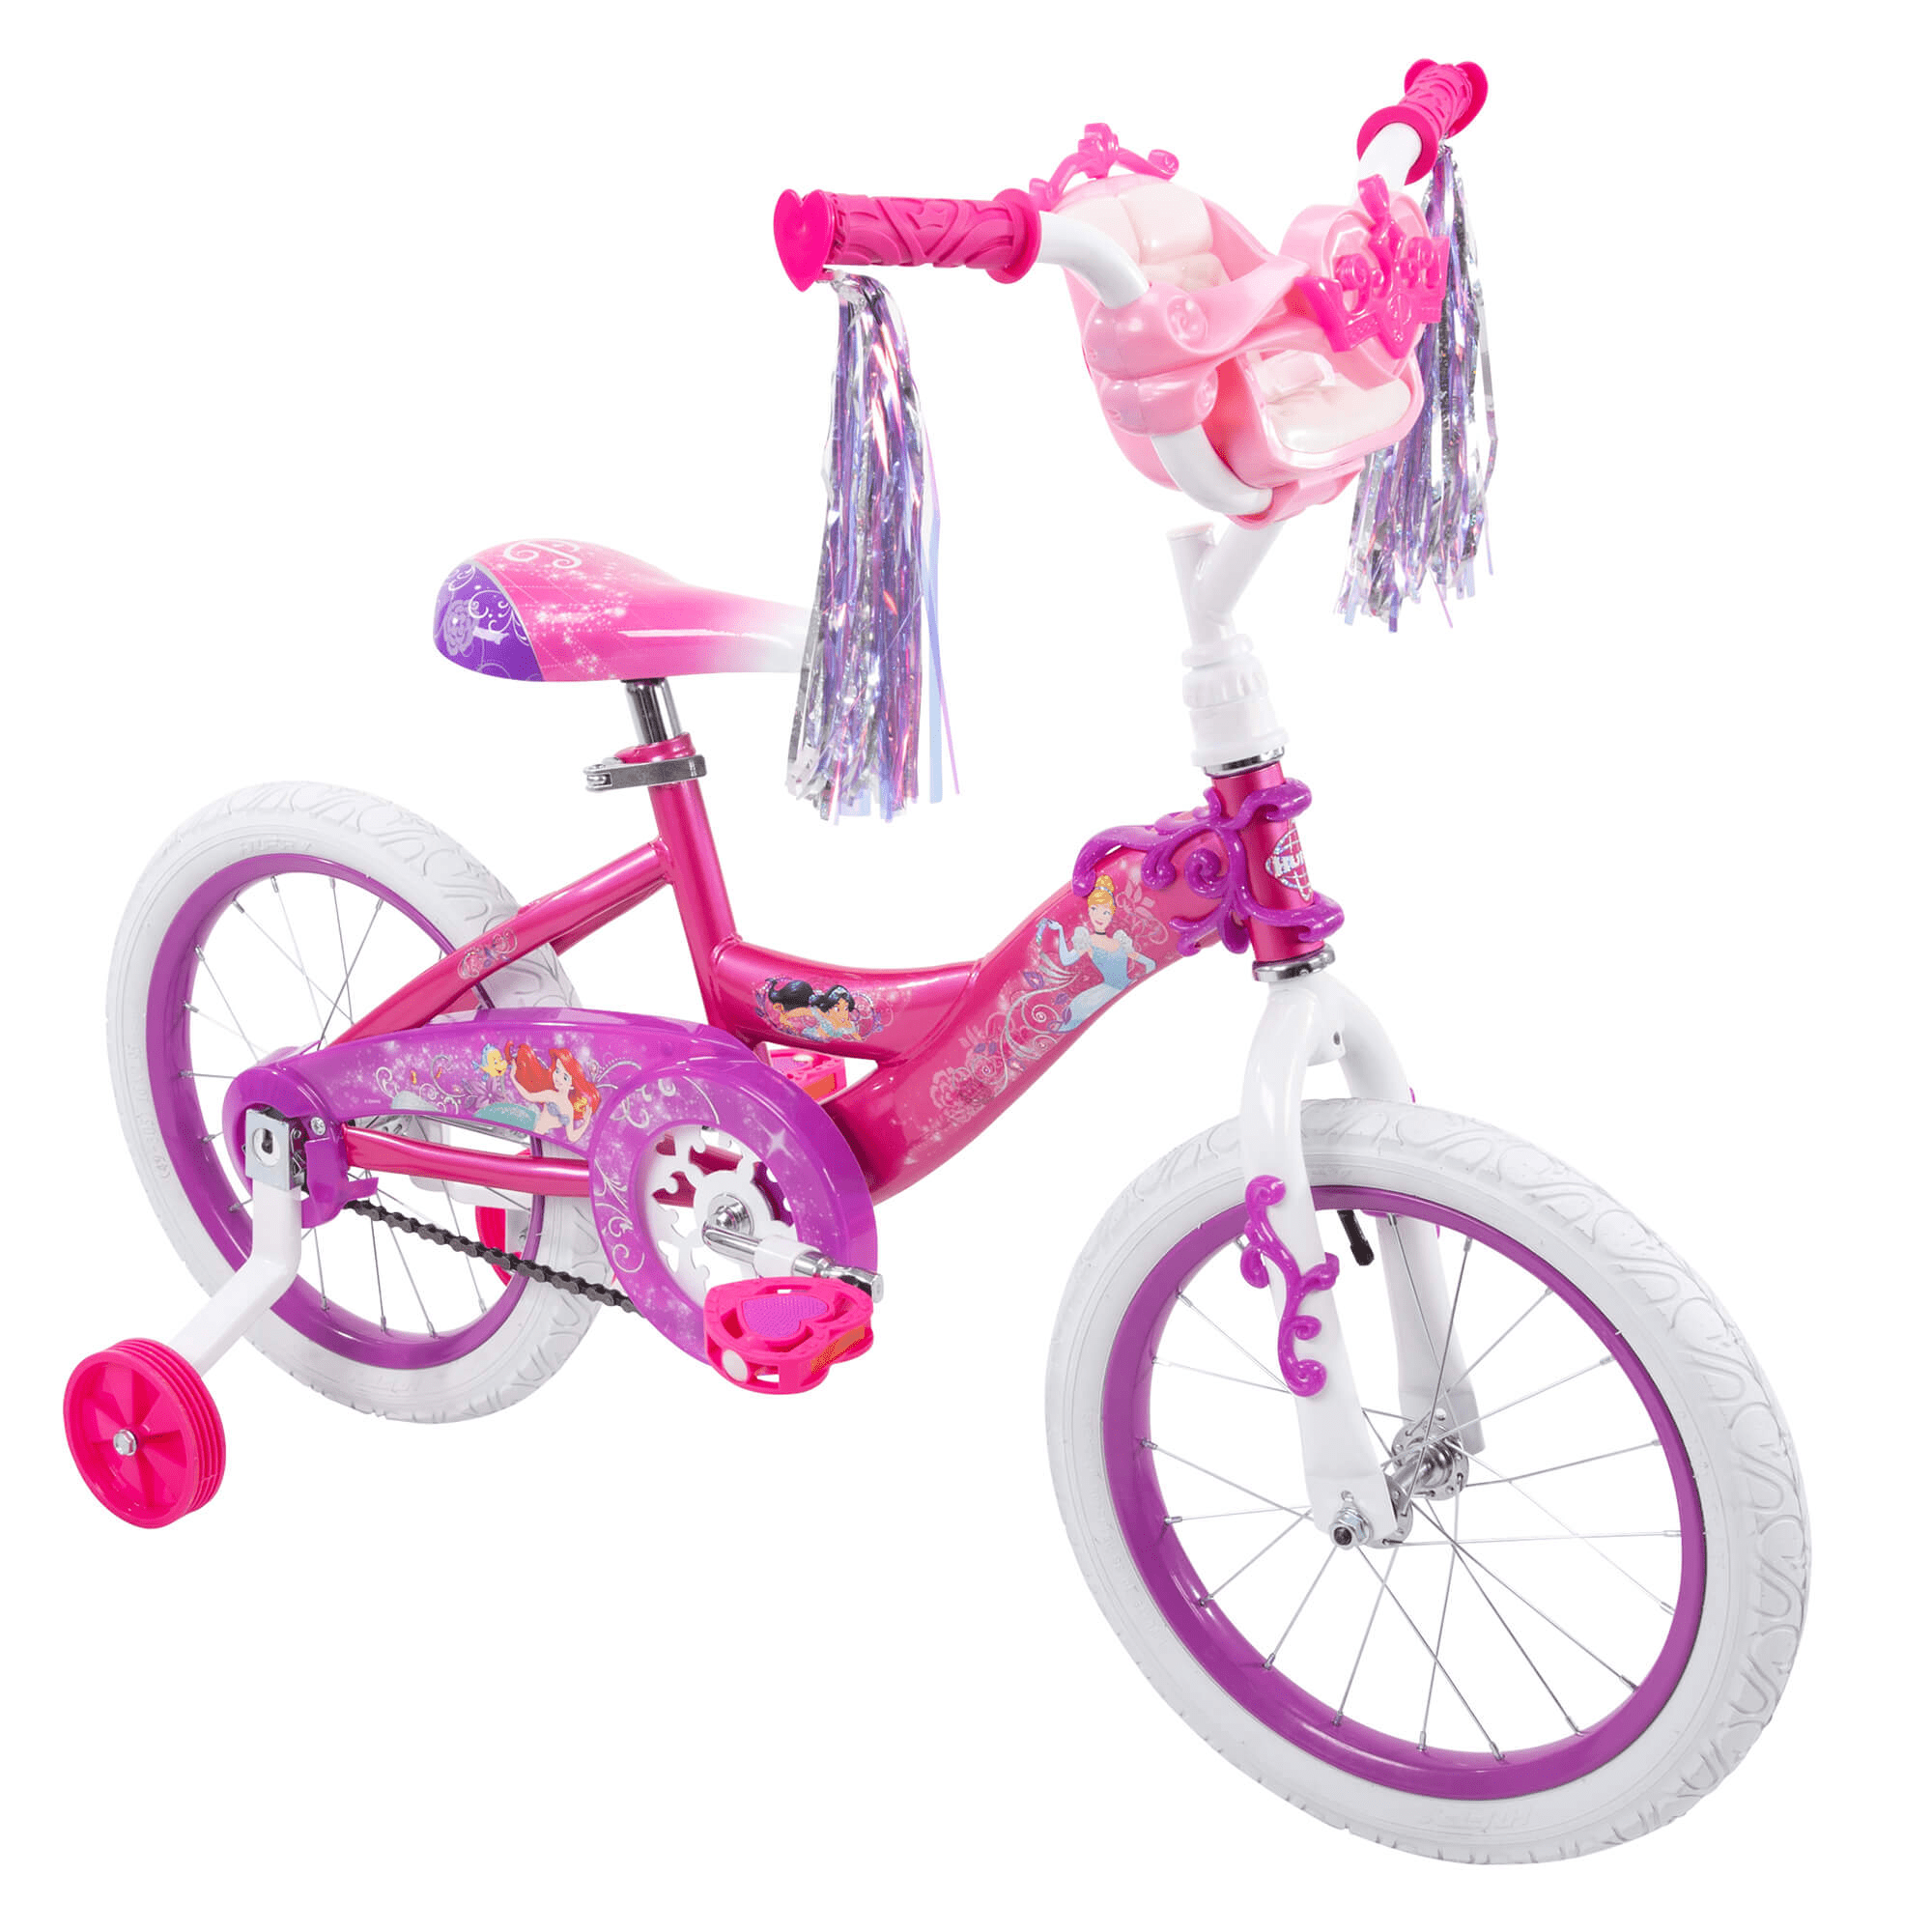 Disney Princess 16inch Girls' Bike , Pink by Huffy